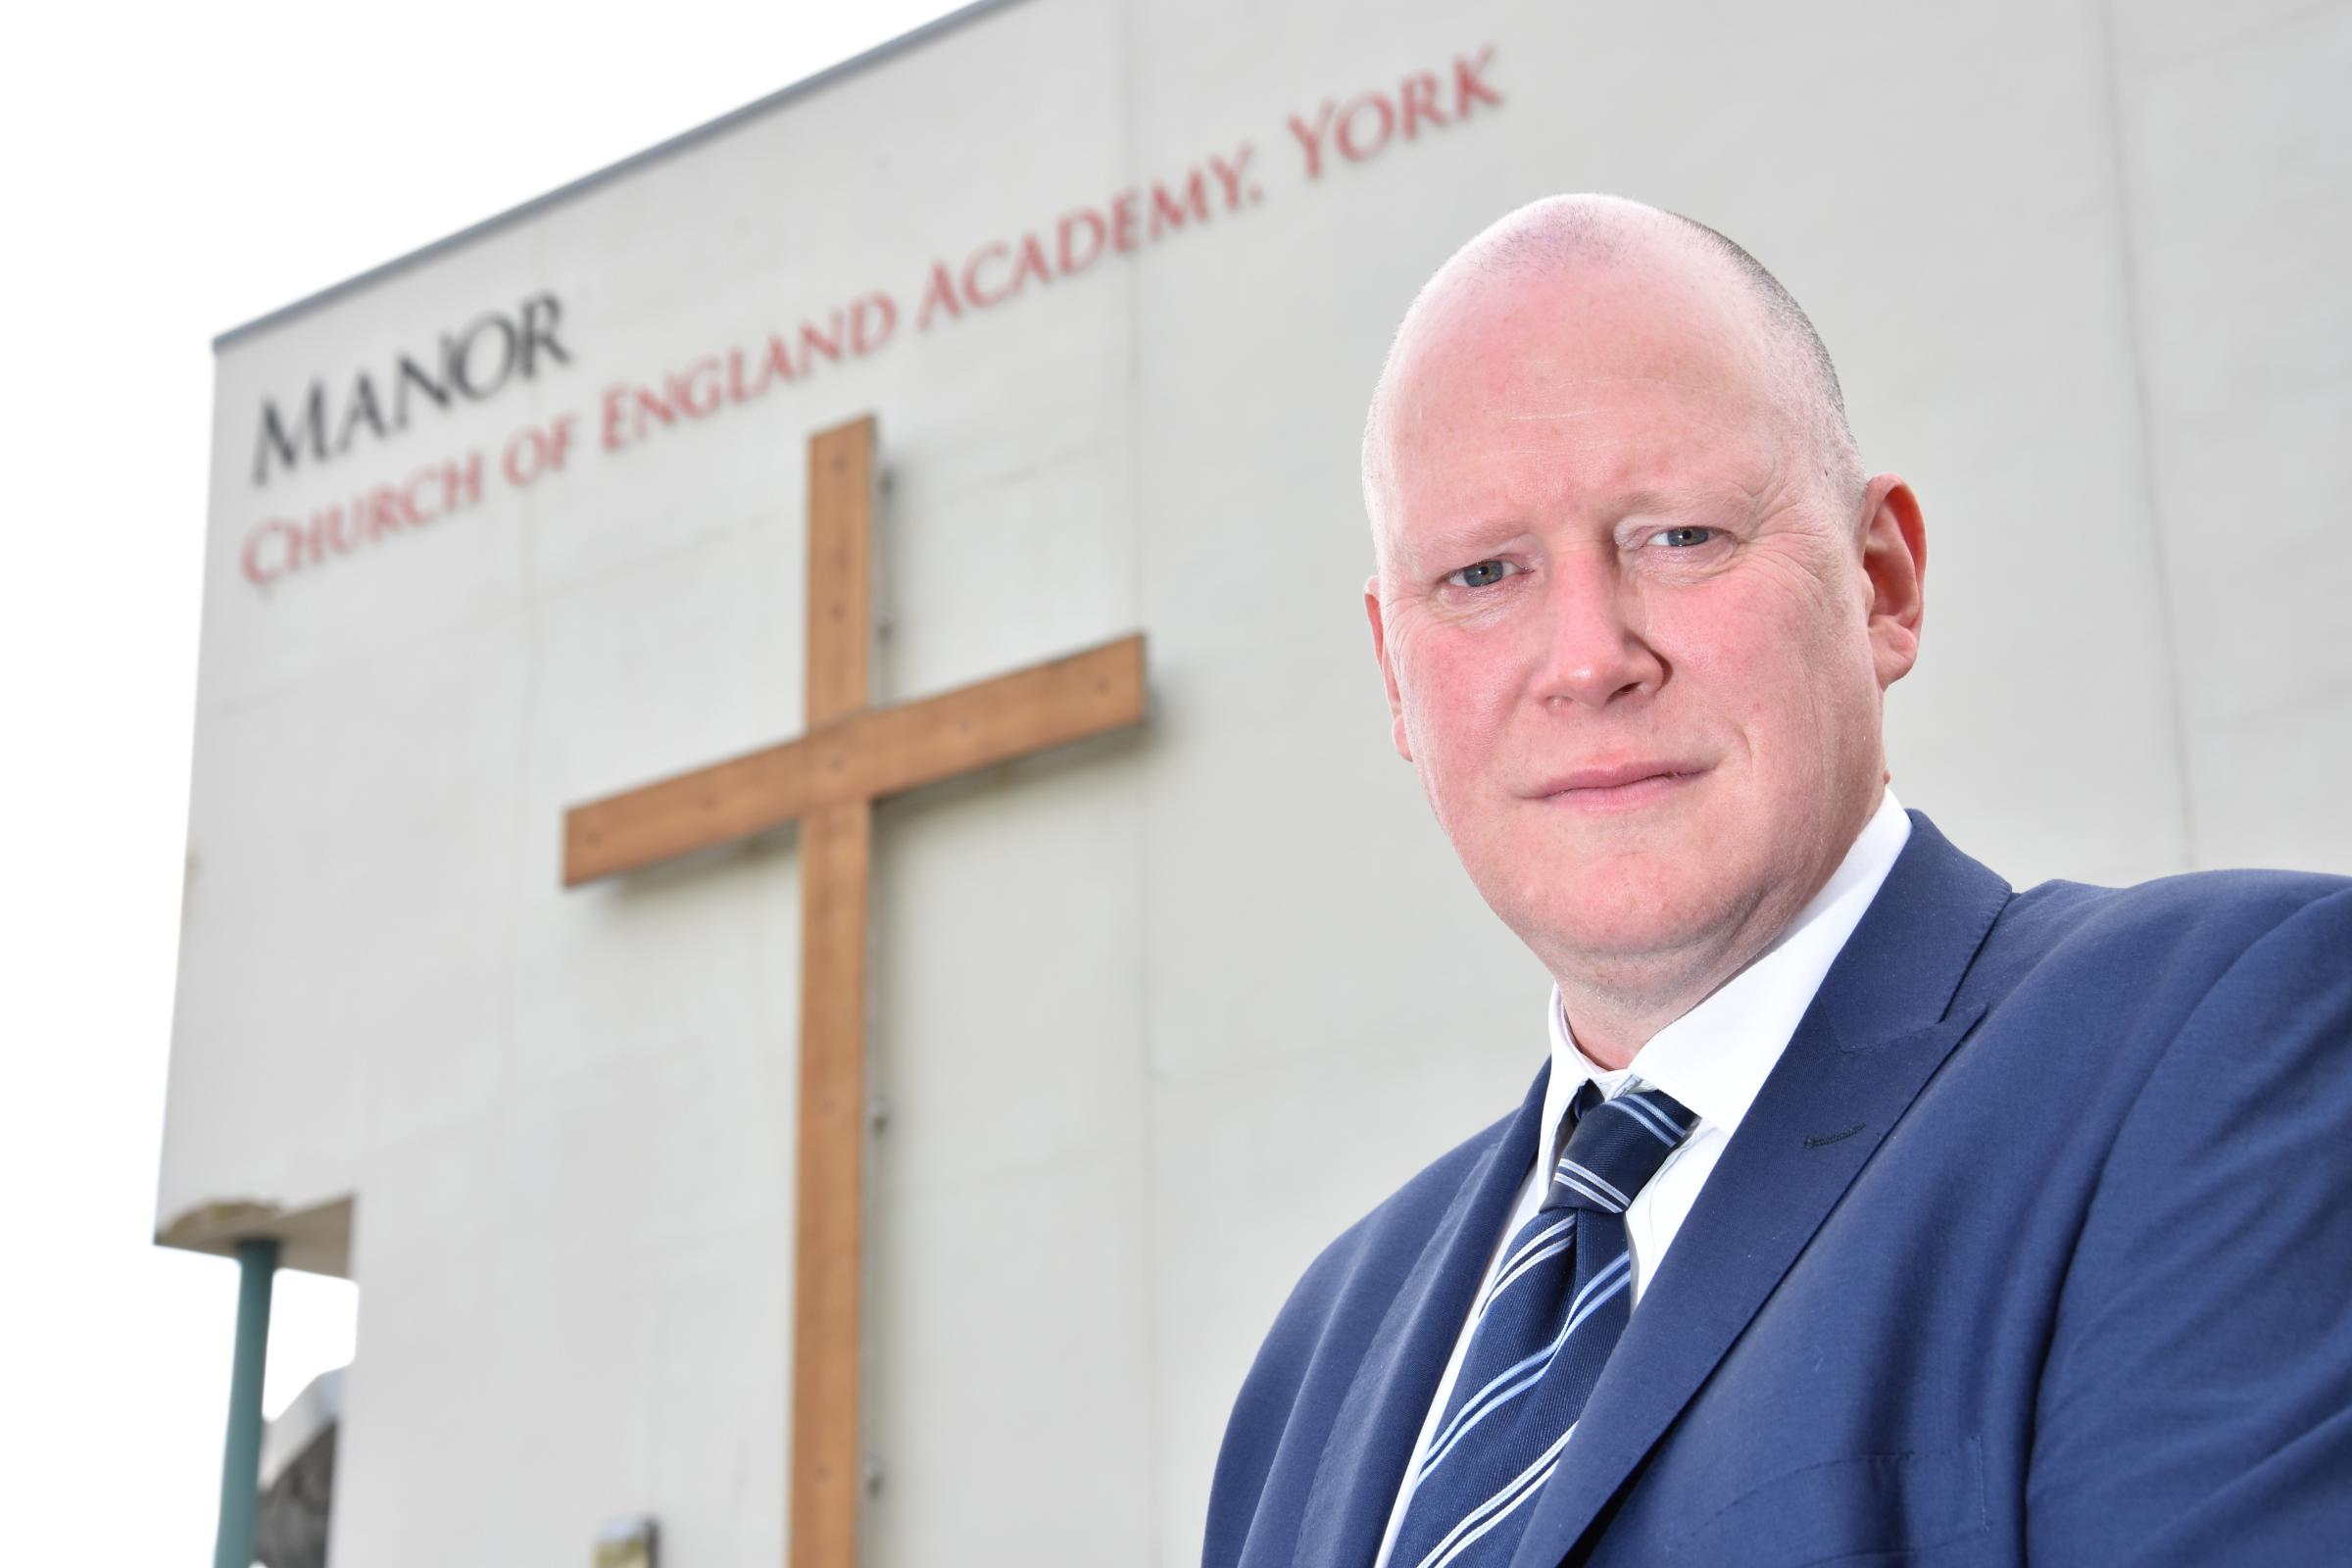 York Manor CE Academy head joining Minerva Trust, Sheffield